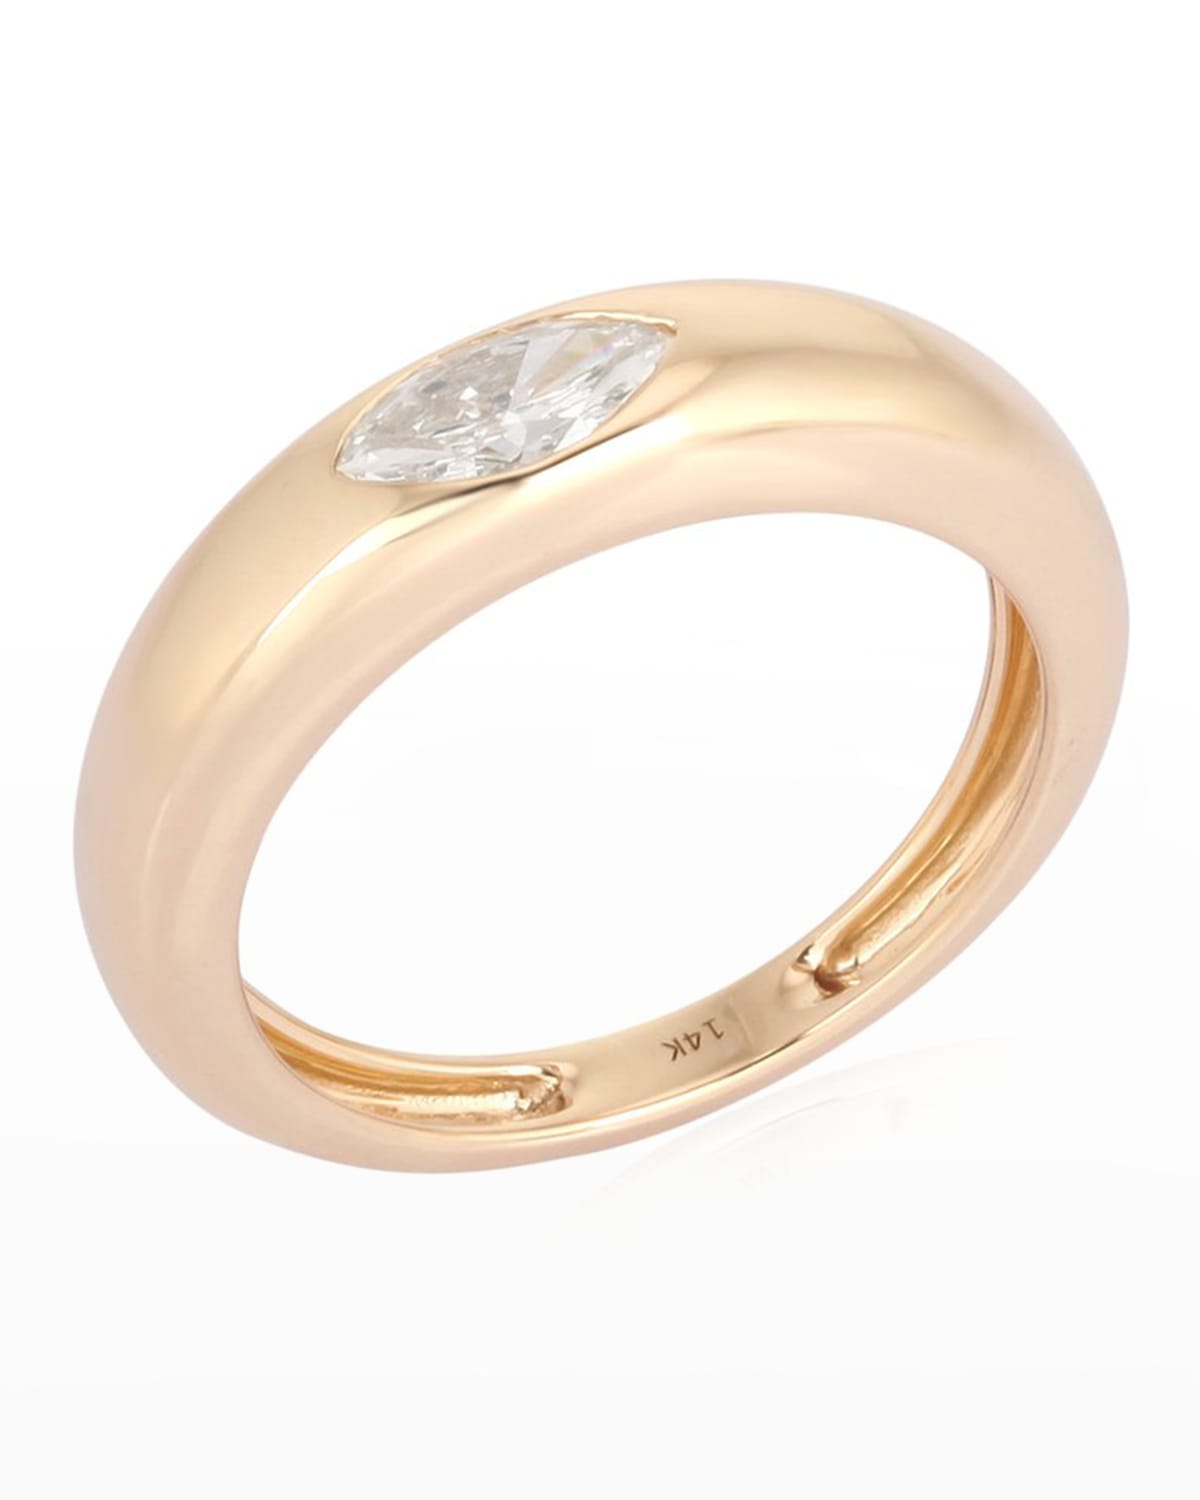 Kastel Jewelry Marquis Diamond Ring, Size 7